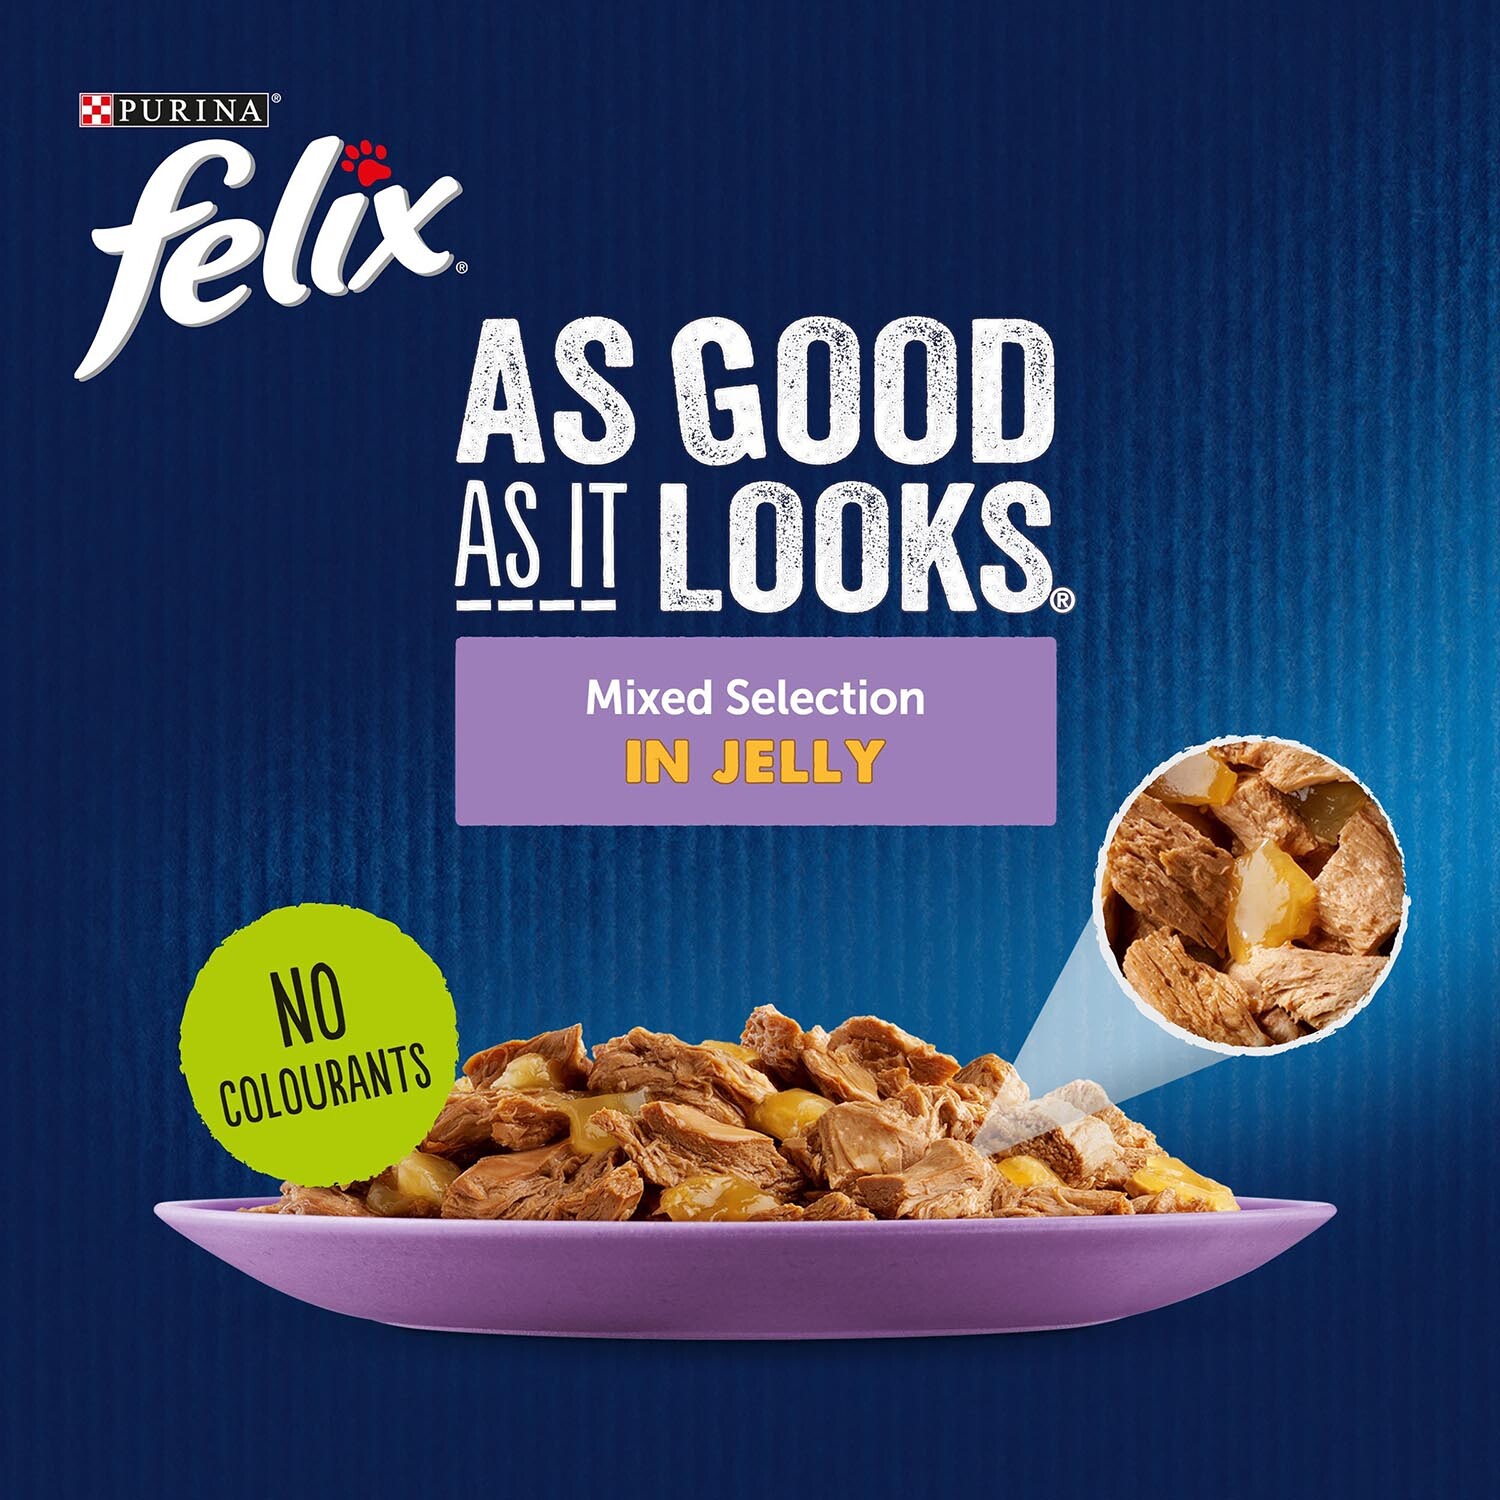 Felix 'As Good as it Looks' Mix Selection Jumbo Pack Image 2